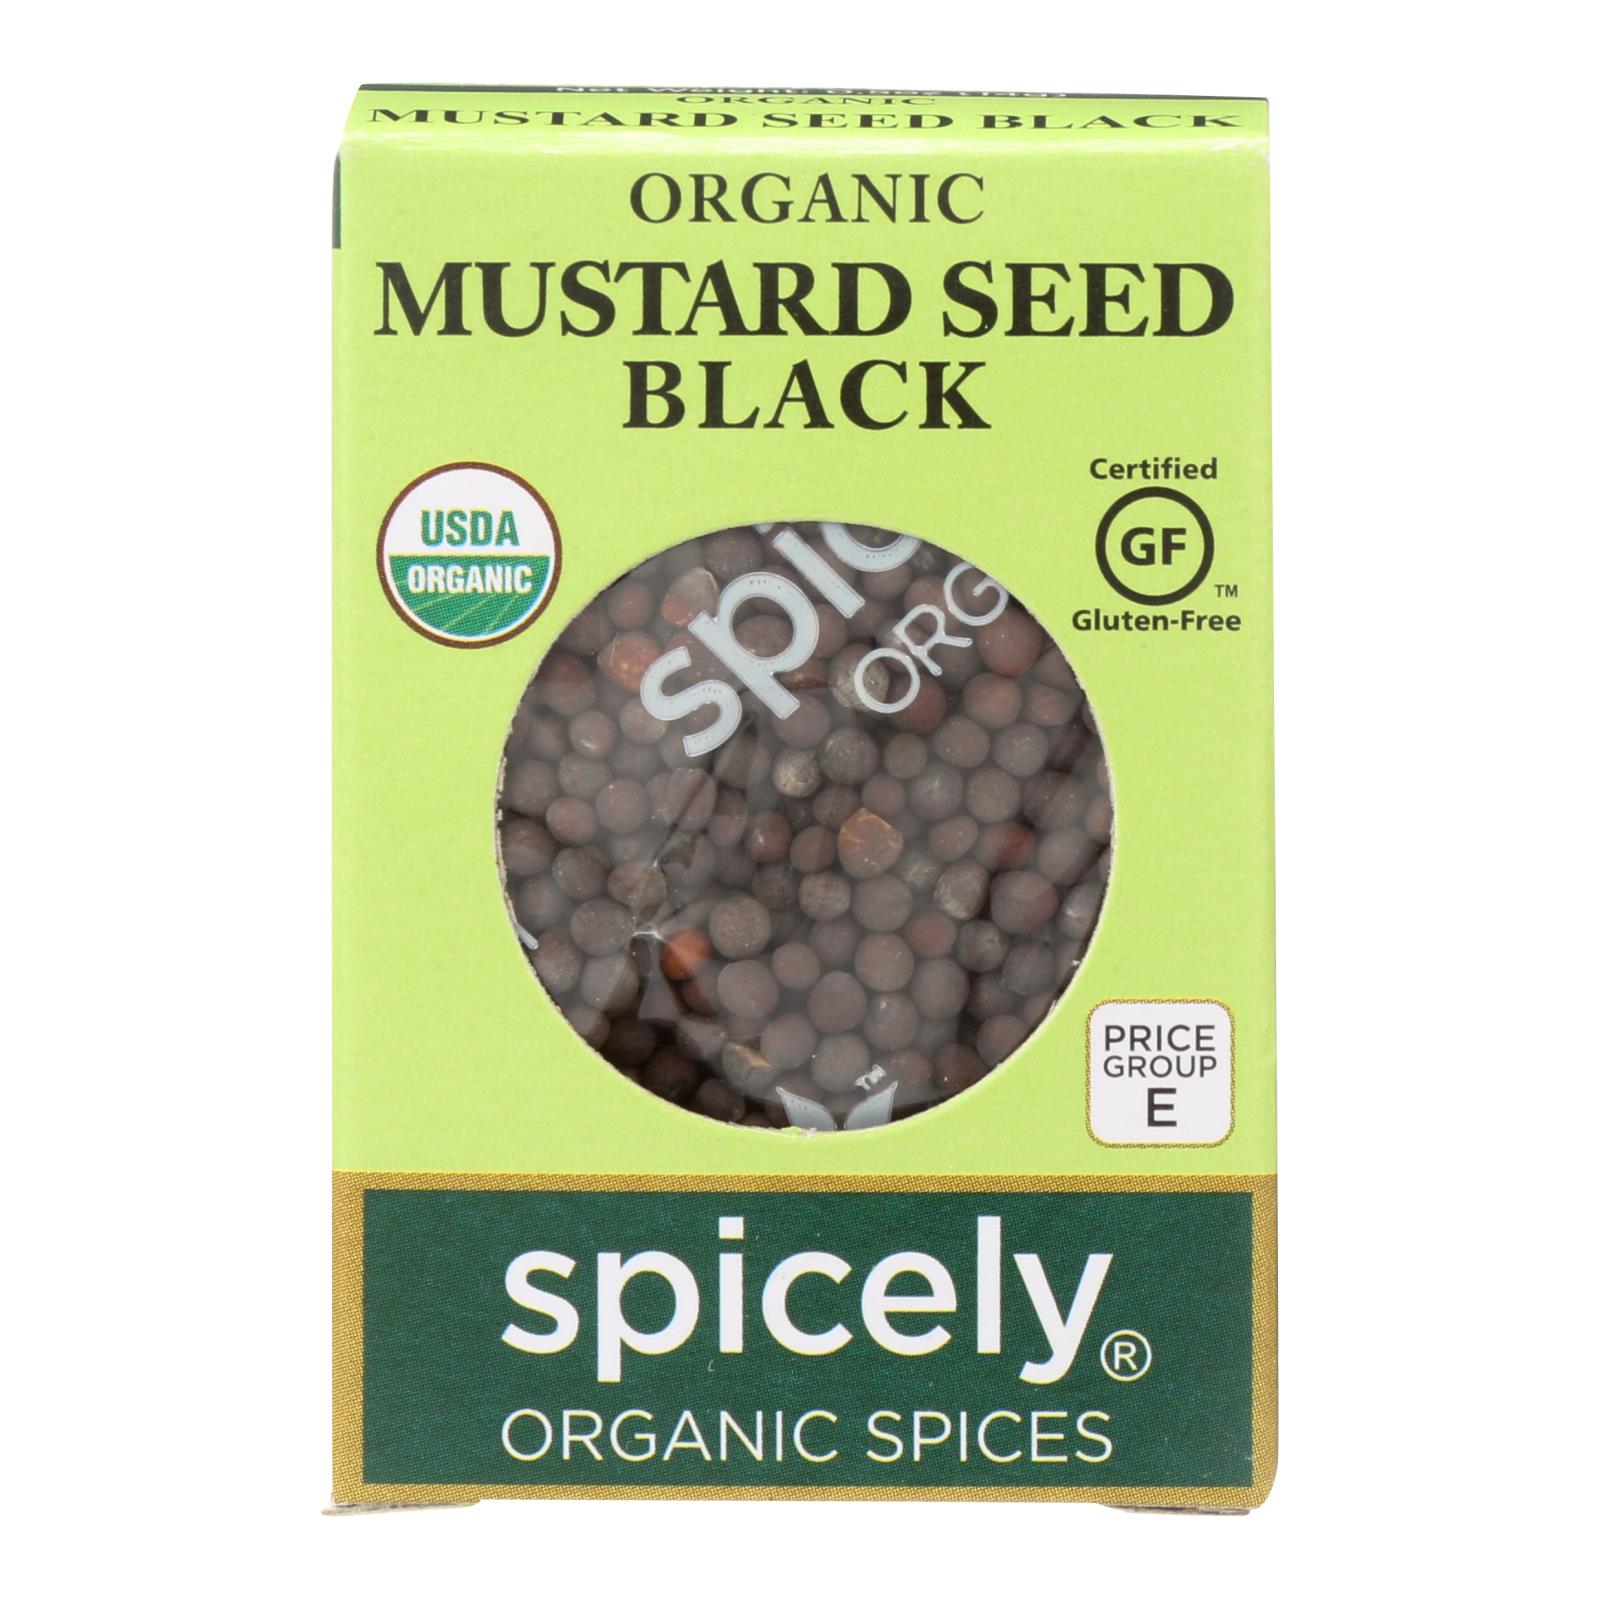 Spicely Organics - Organic Mustard Seed - Black - 6개 묶음상품 - 0.5 oz.